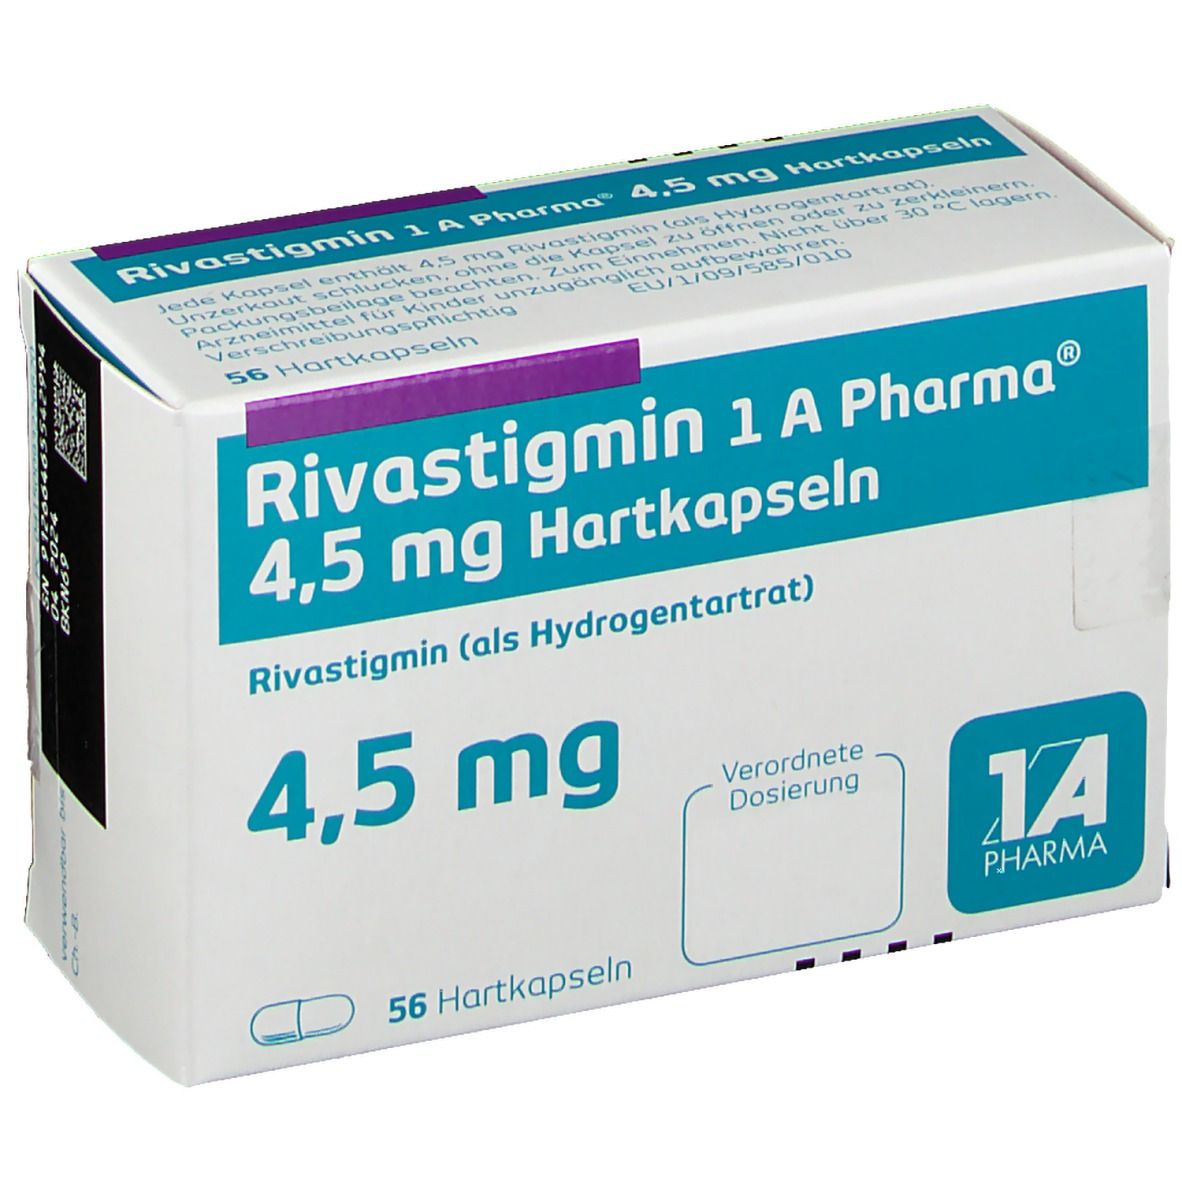 Rivastigmin 1 A Pharma® 4,5 mg